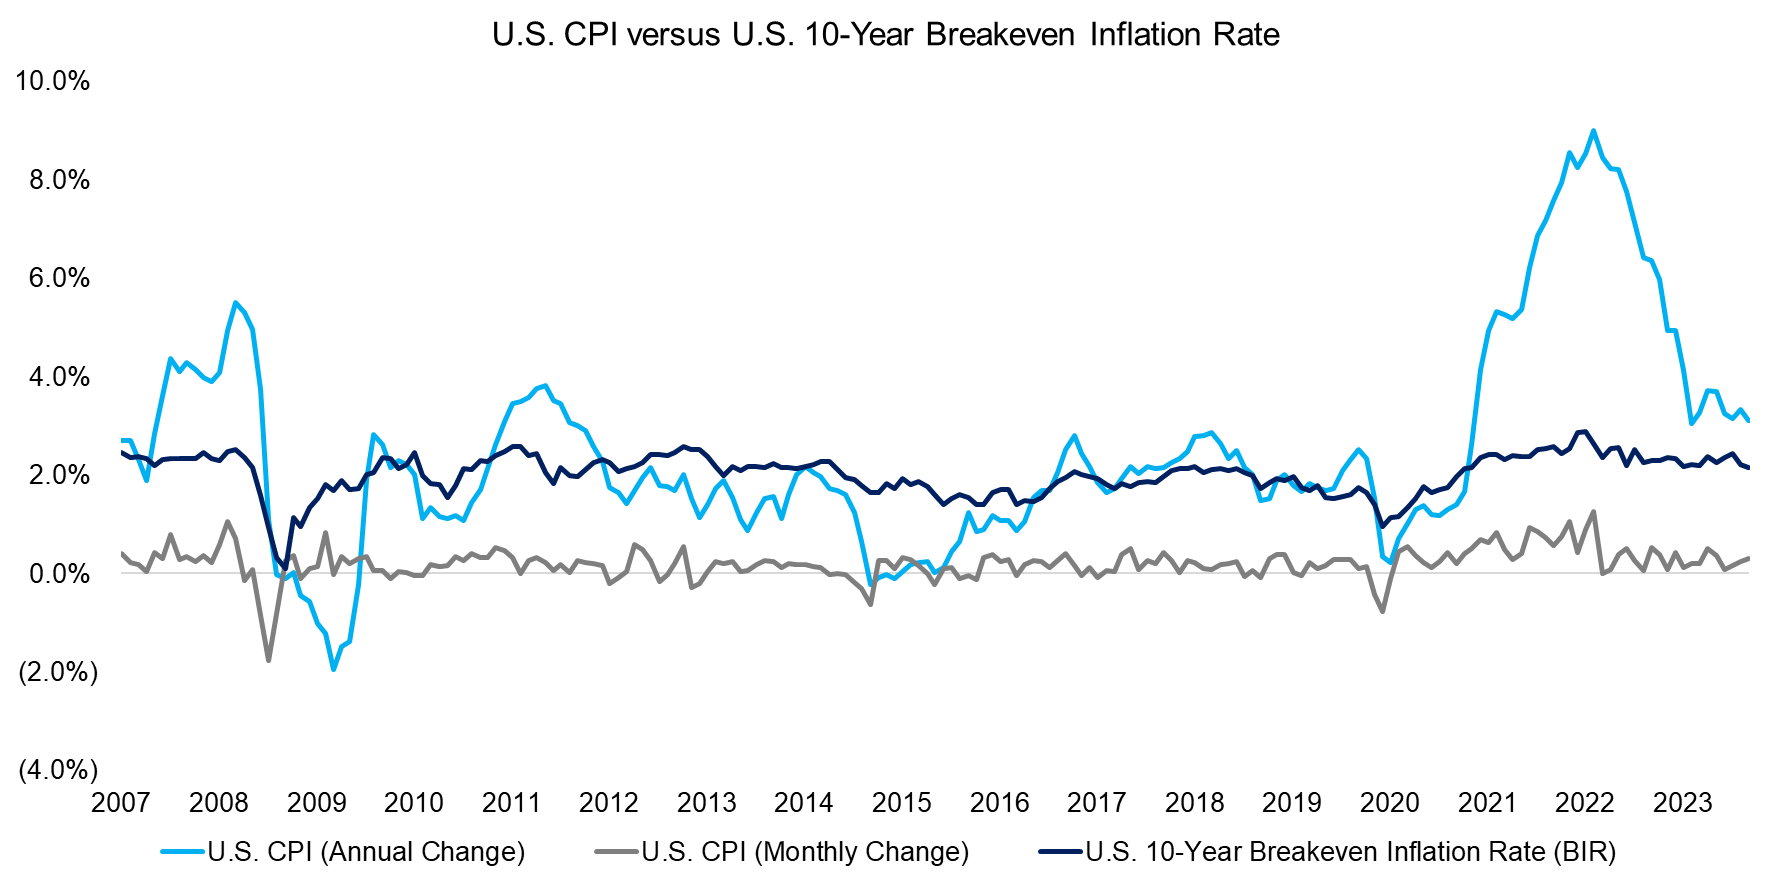 U.S. CPI versus U.S. 10-Year Breakeven Inflation Rate